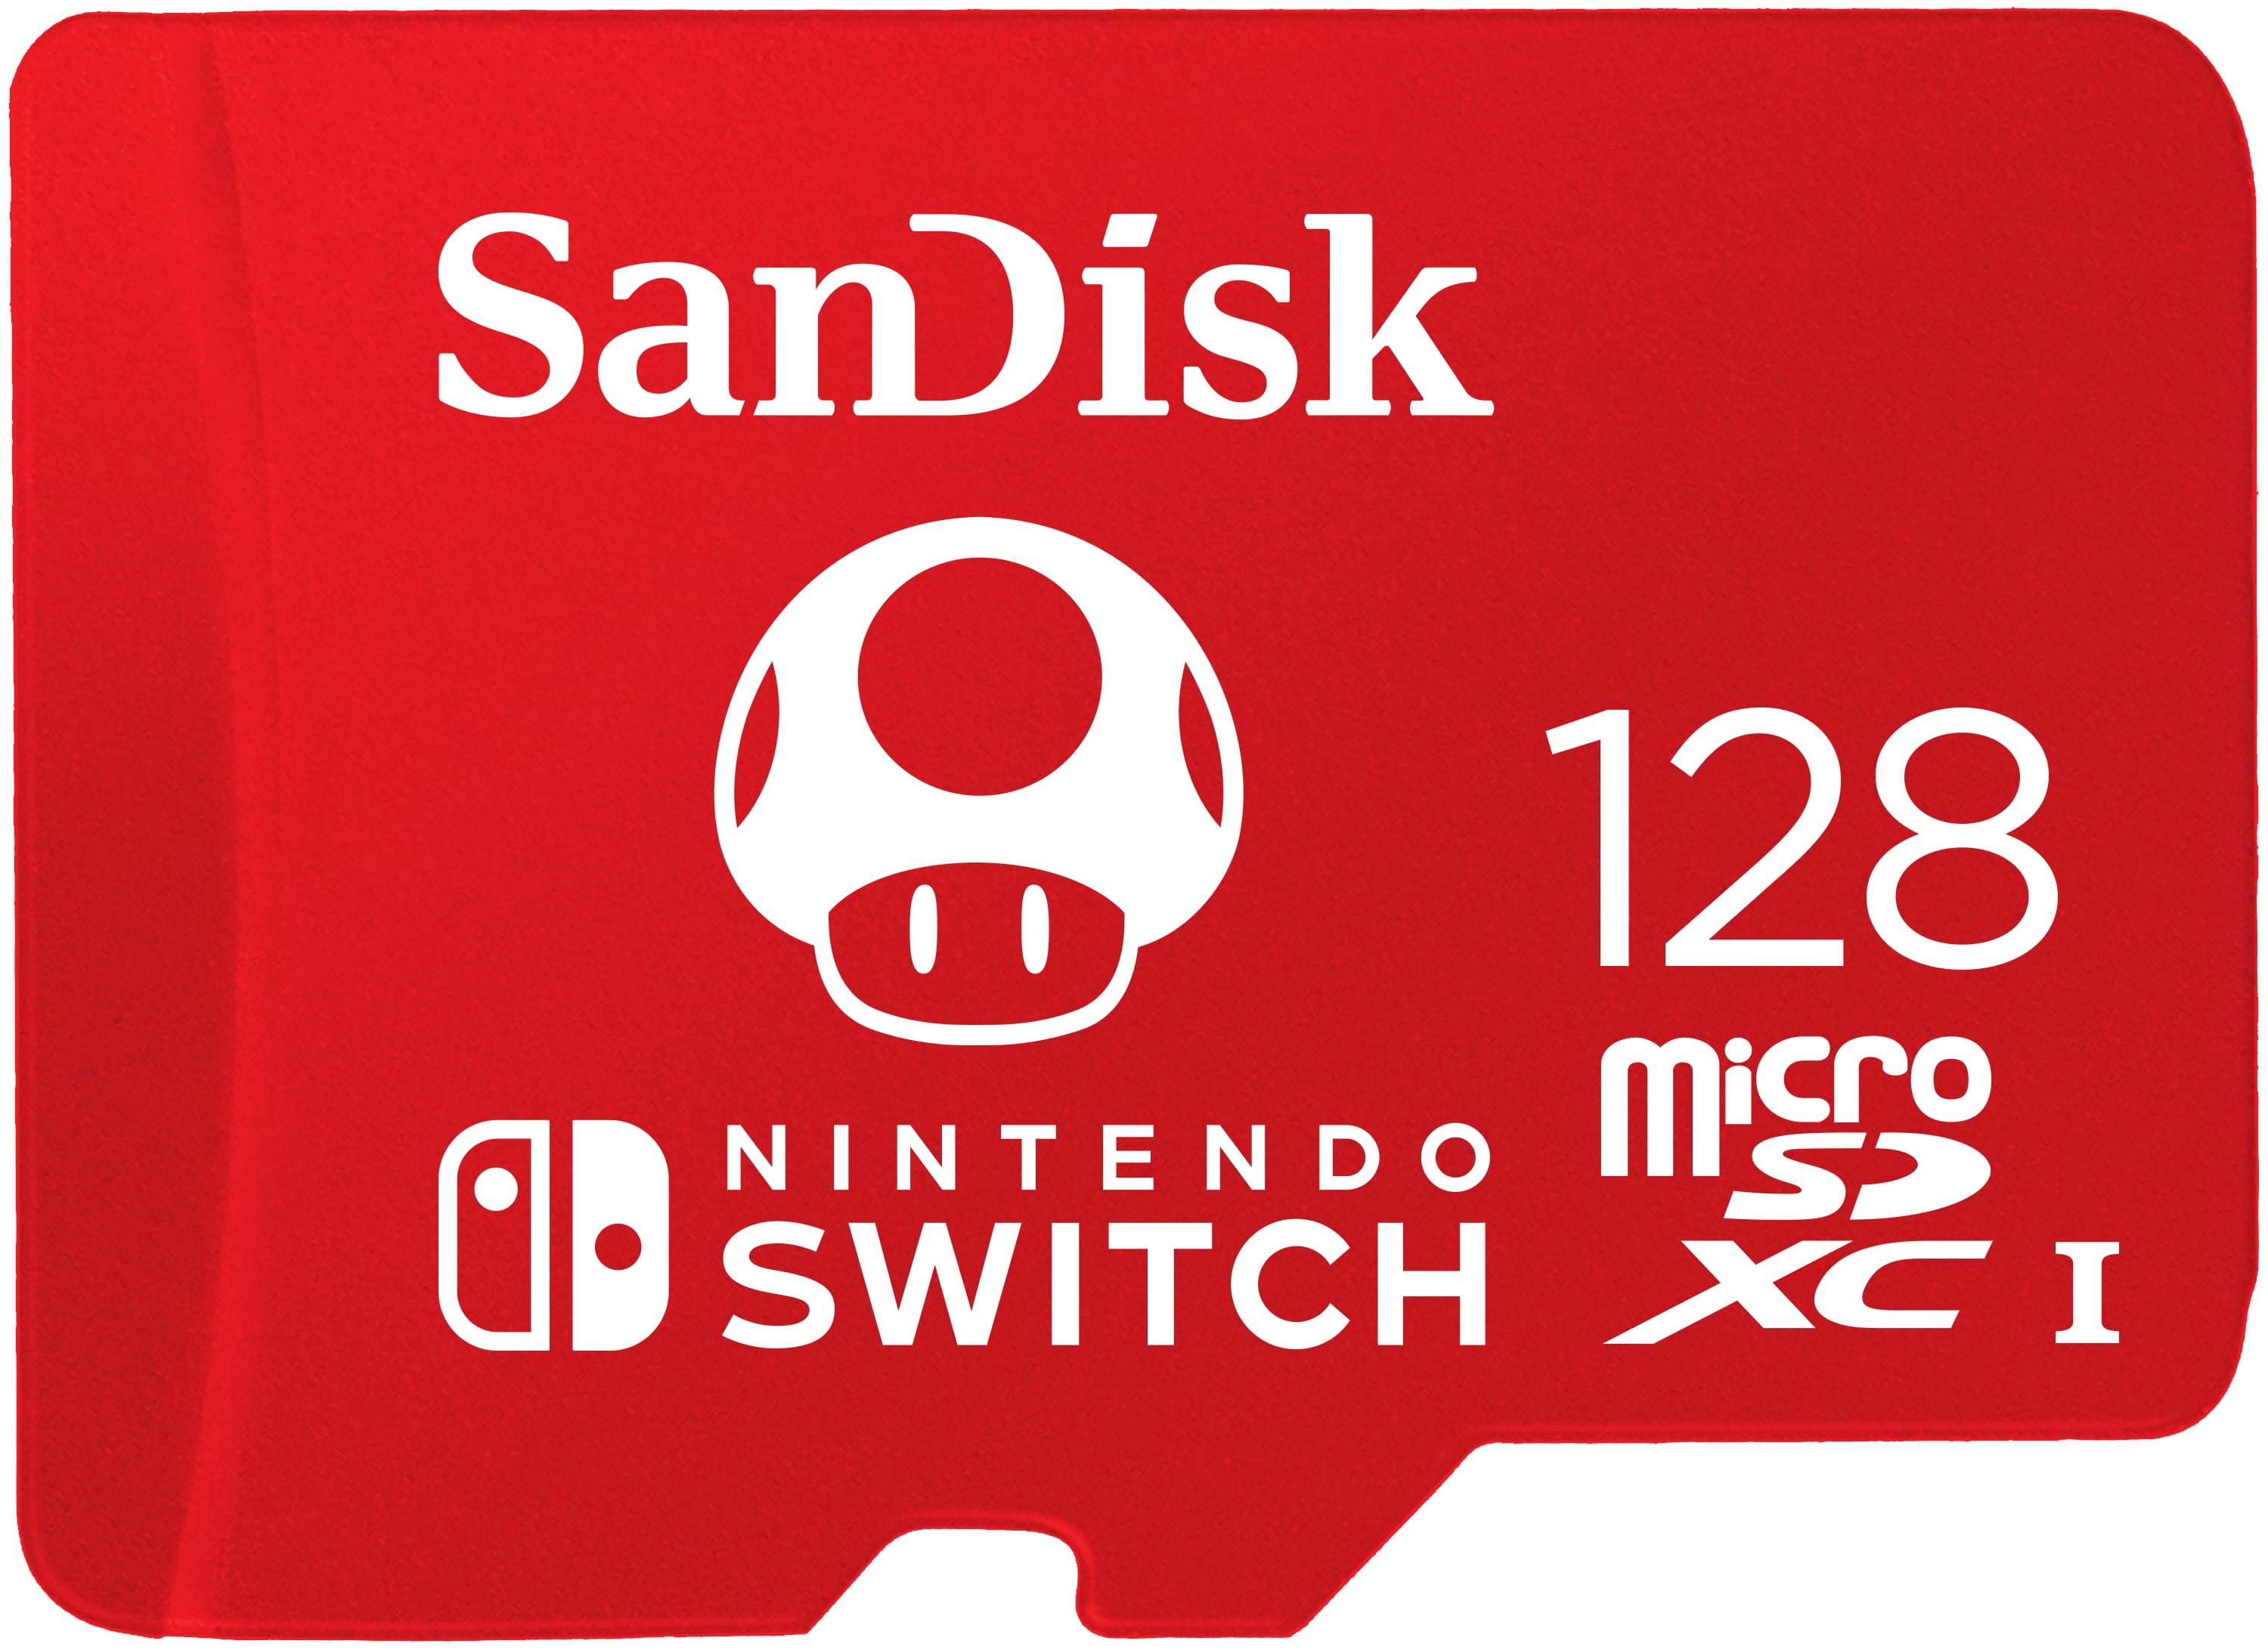 gradvist Musling Børnepalads SanDisk 128GB microSDXC UHS-I Memory Card Licensed for Nintendo Switch, Red  - 100MB/s, Micro SD Card - SDSQXBO-128G-AWCZA - Walmart.com